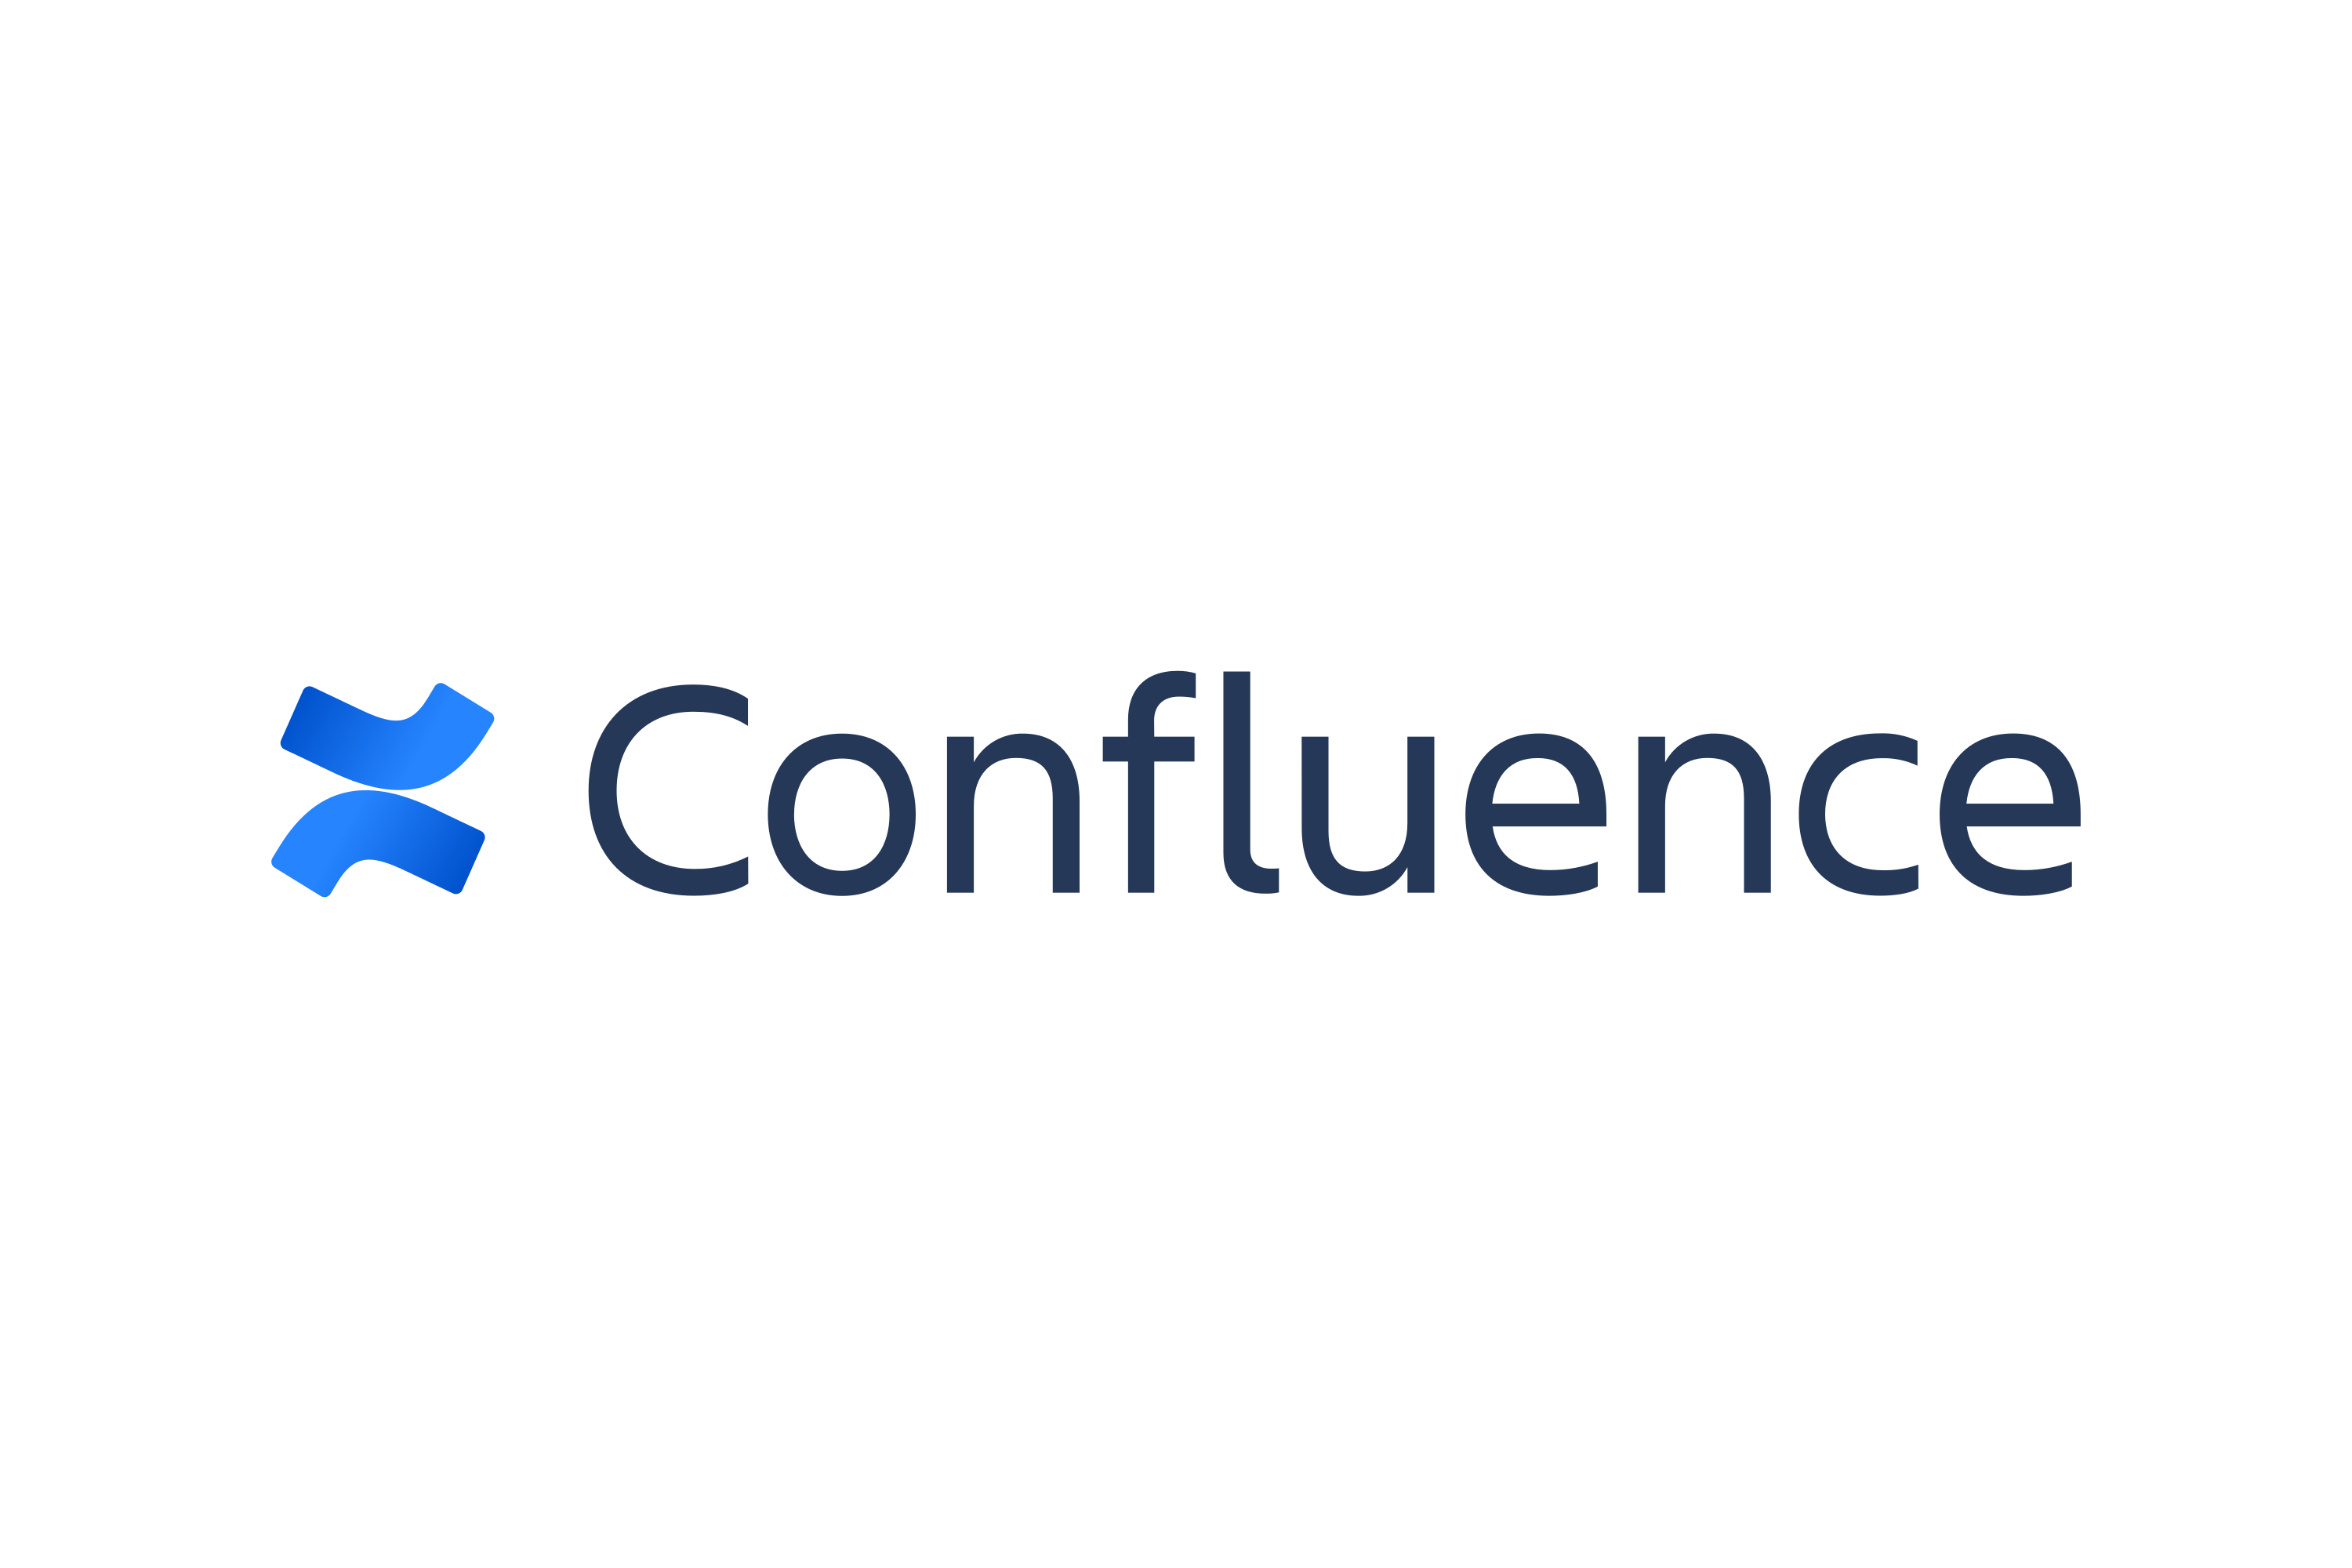 Download Confluence Logo in SVG Vector or PNG File Format - Logo.wine